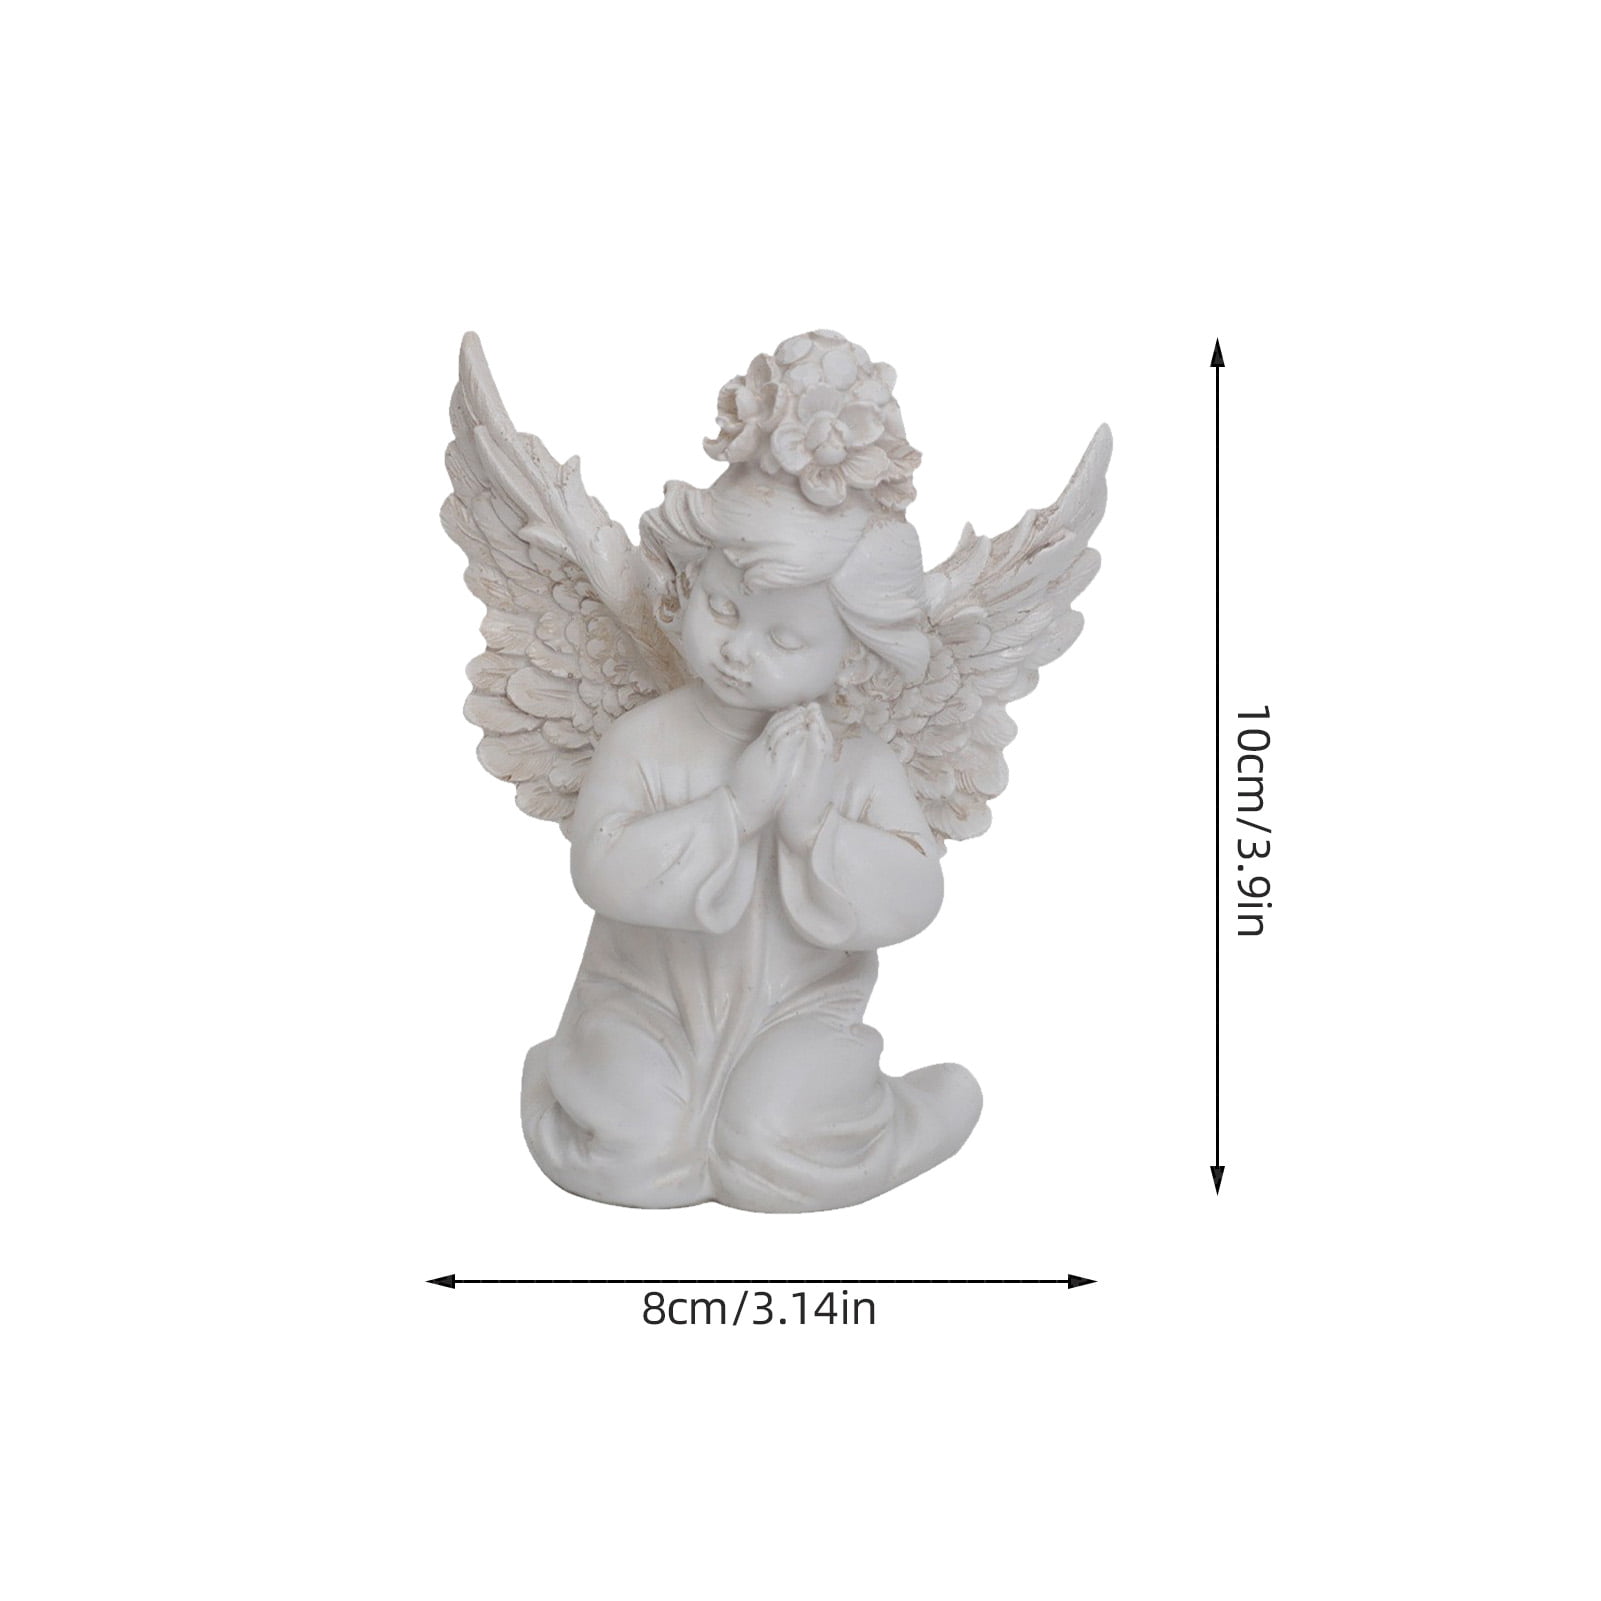 Beautiful Resin Angels Guardian Angel Wings Statue Figurine Ornament Xmas Gift 